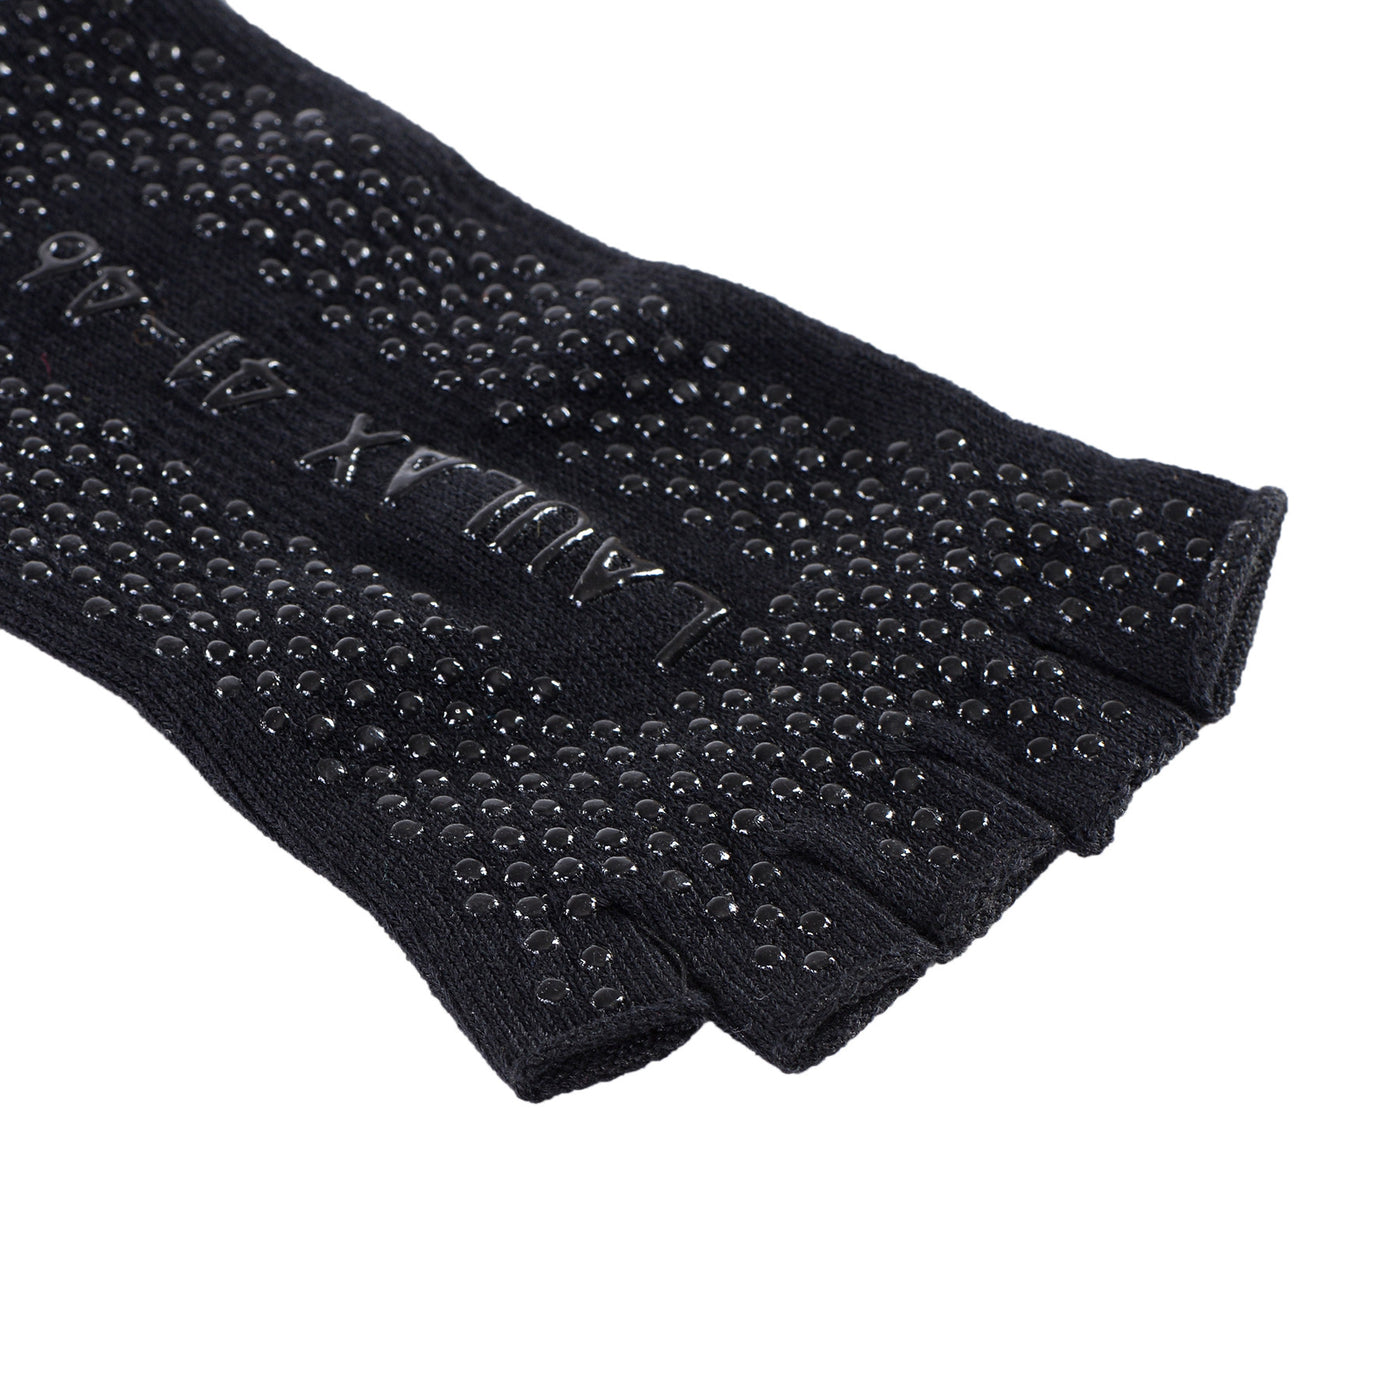 2 Pairs Ladies High Quality Professional Anti Slip Half Toe Yoga Socks - Black